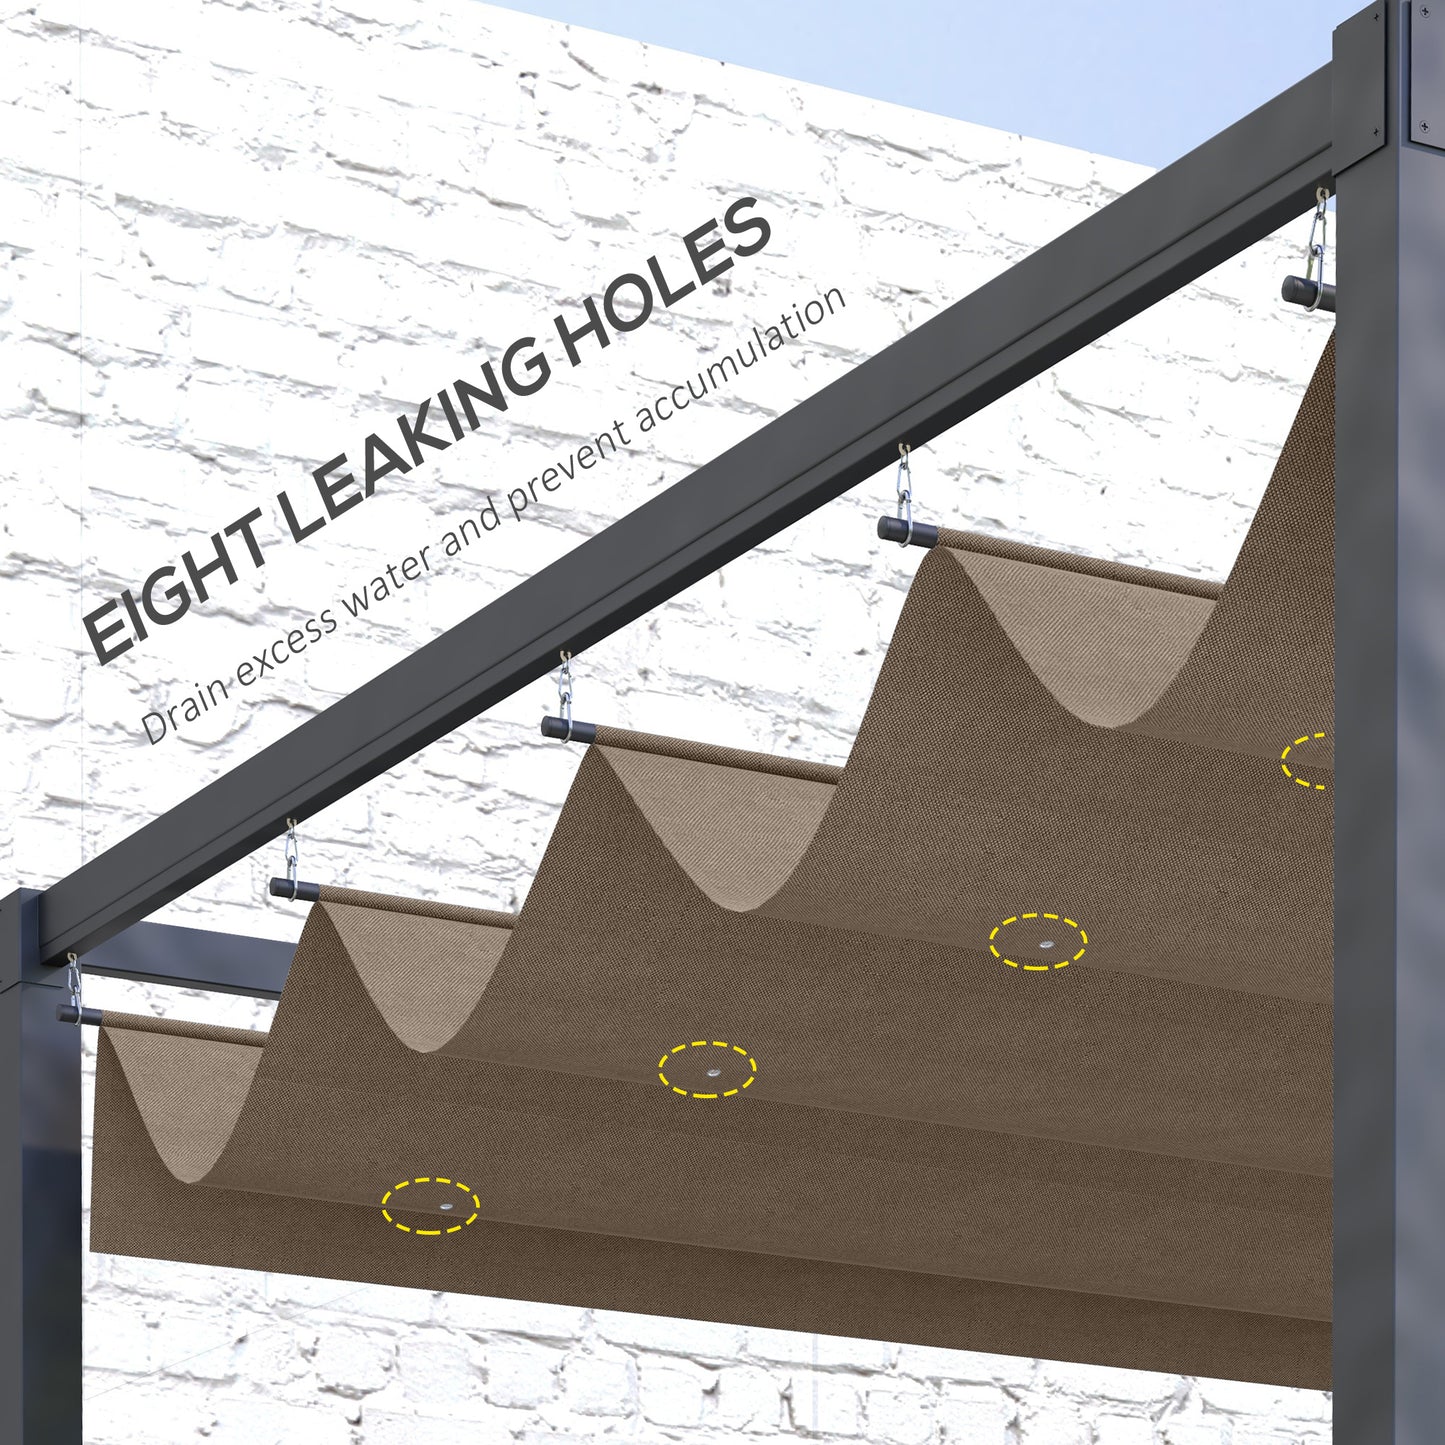 Outsunny Pergola Roof, Retractable Sun Shade Cover for 3 x 2.15m Pergola, UV30+ Protected, Coffee